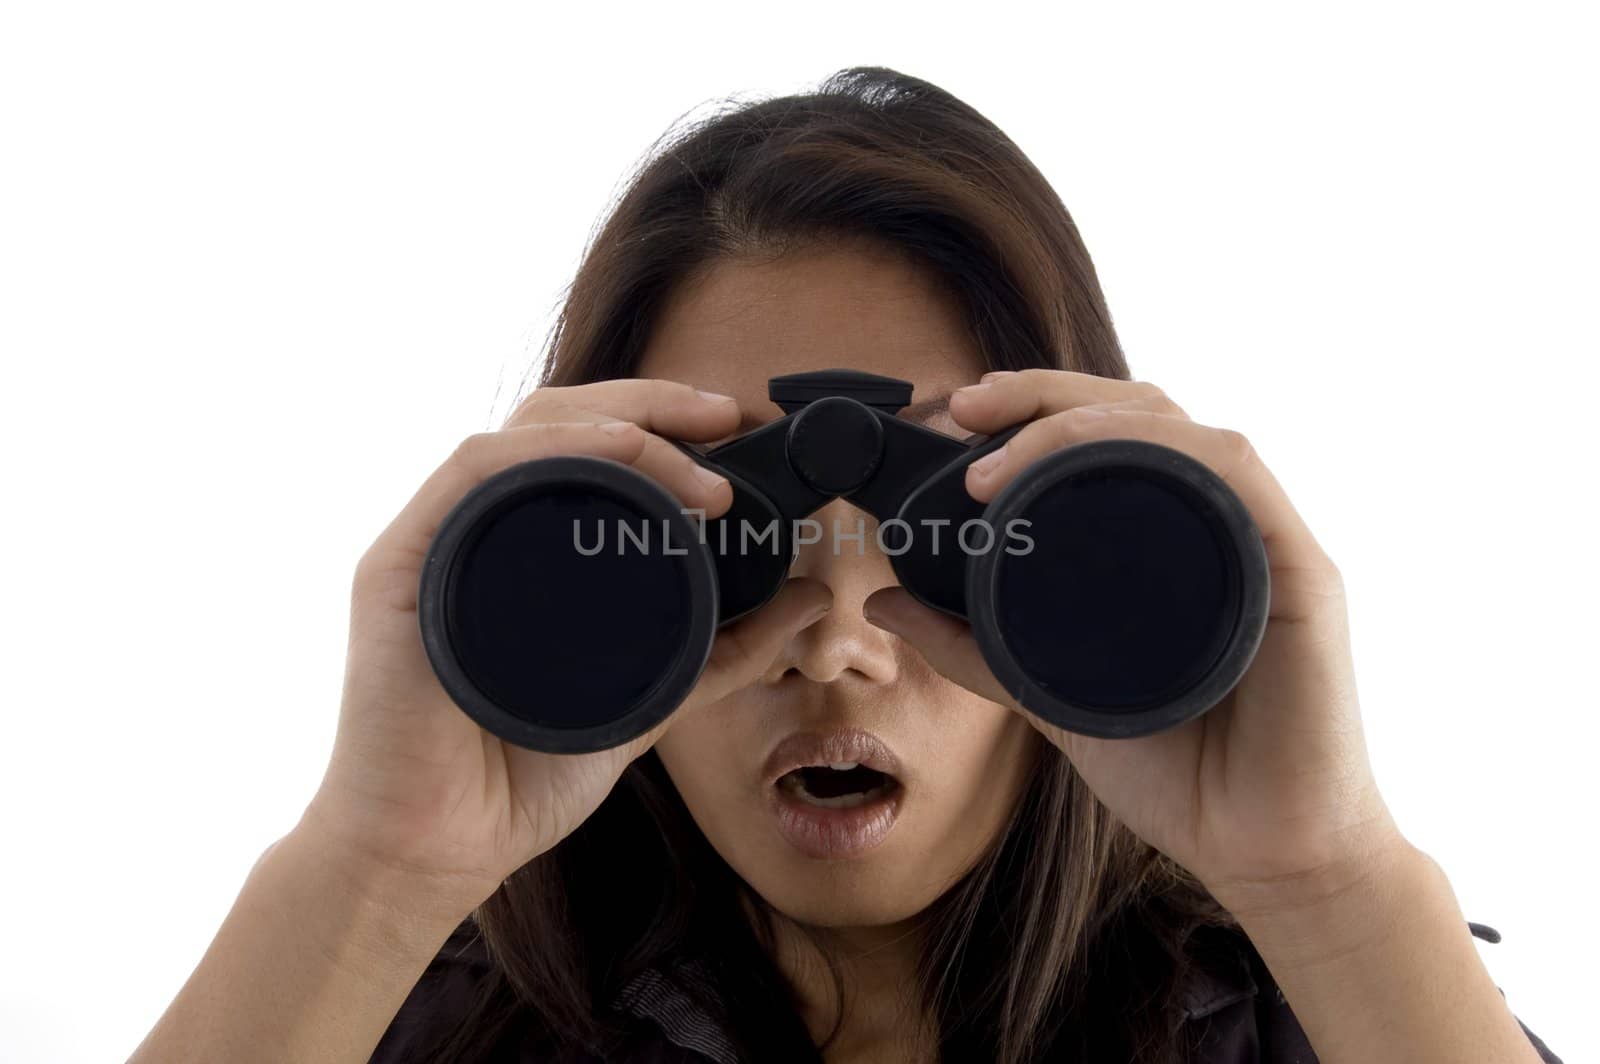 astonished female watching through binocular against white background